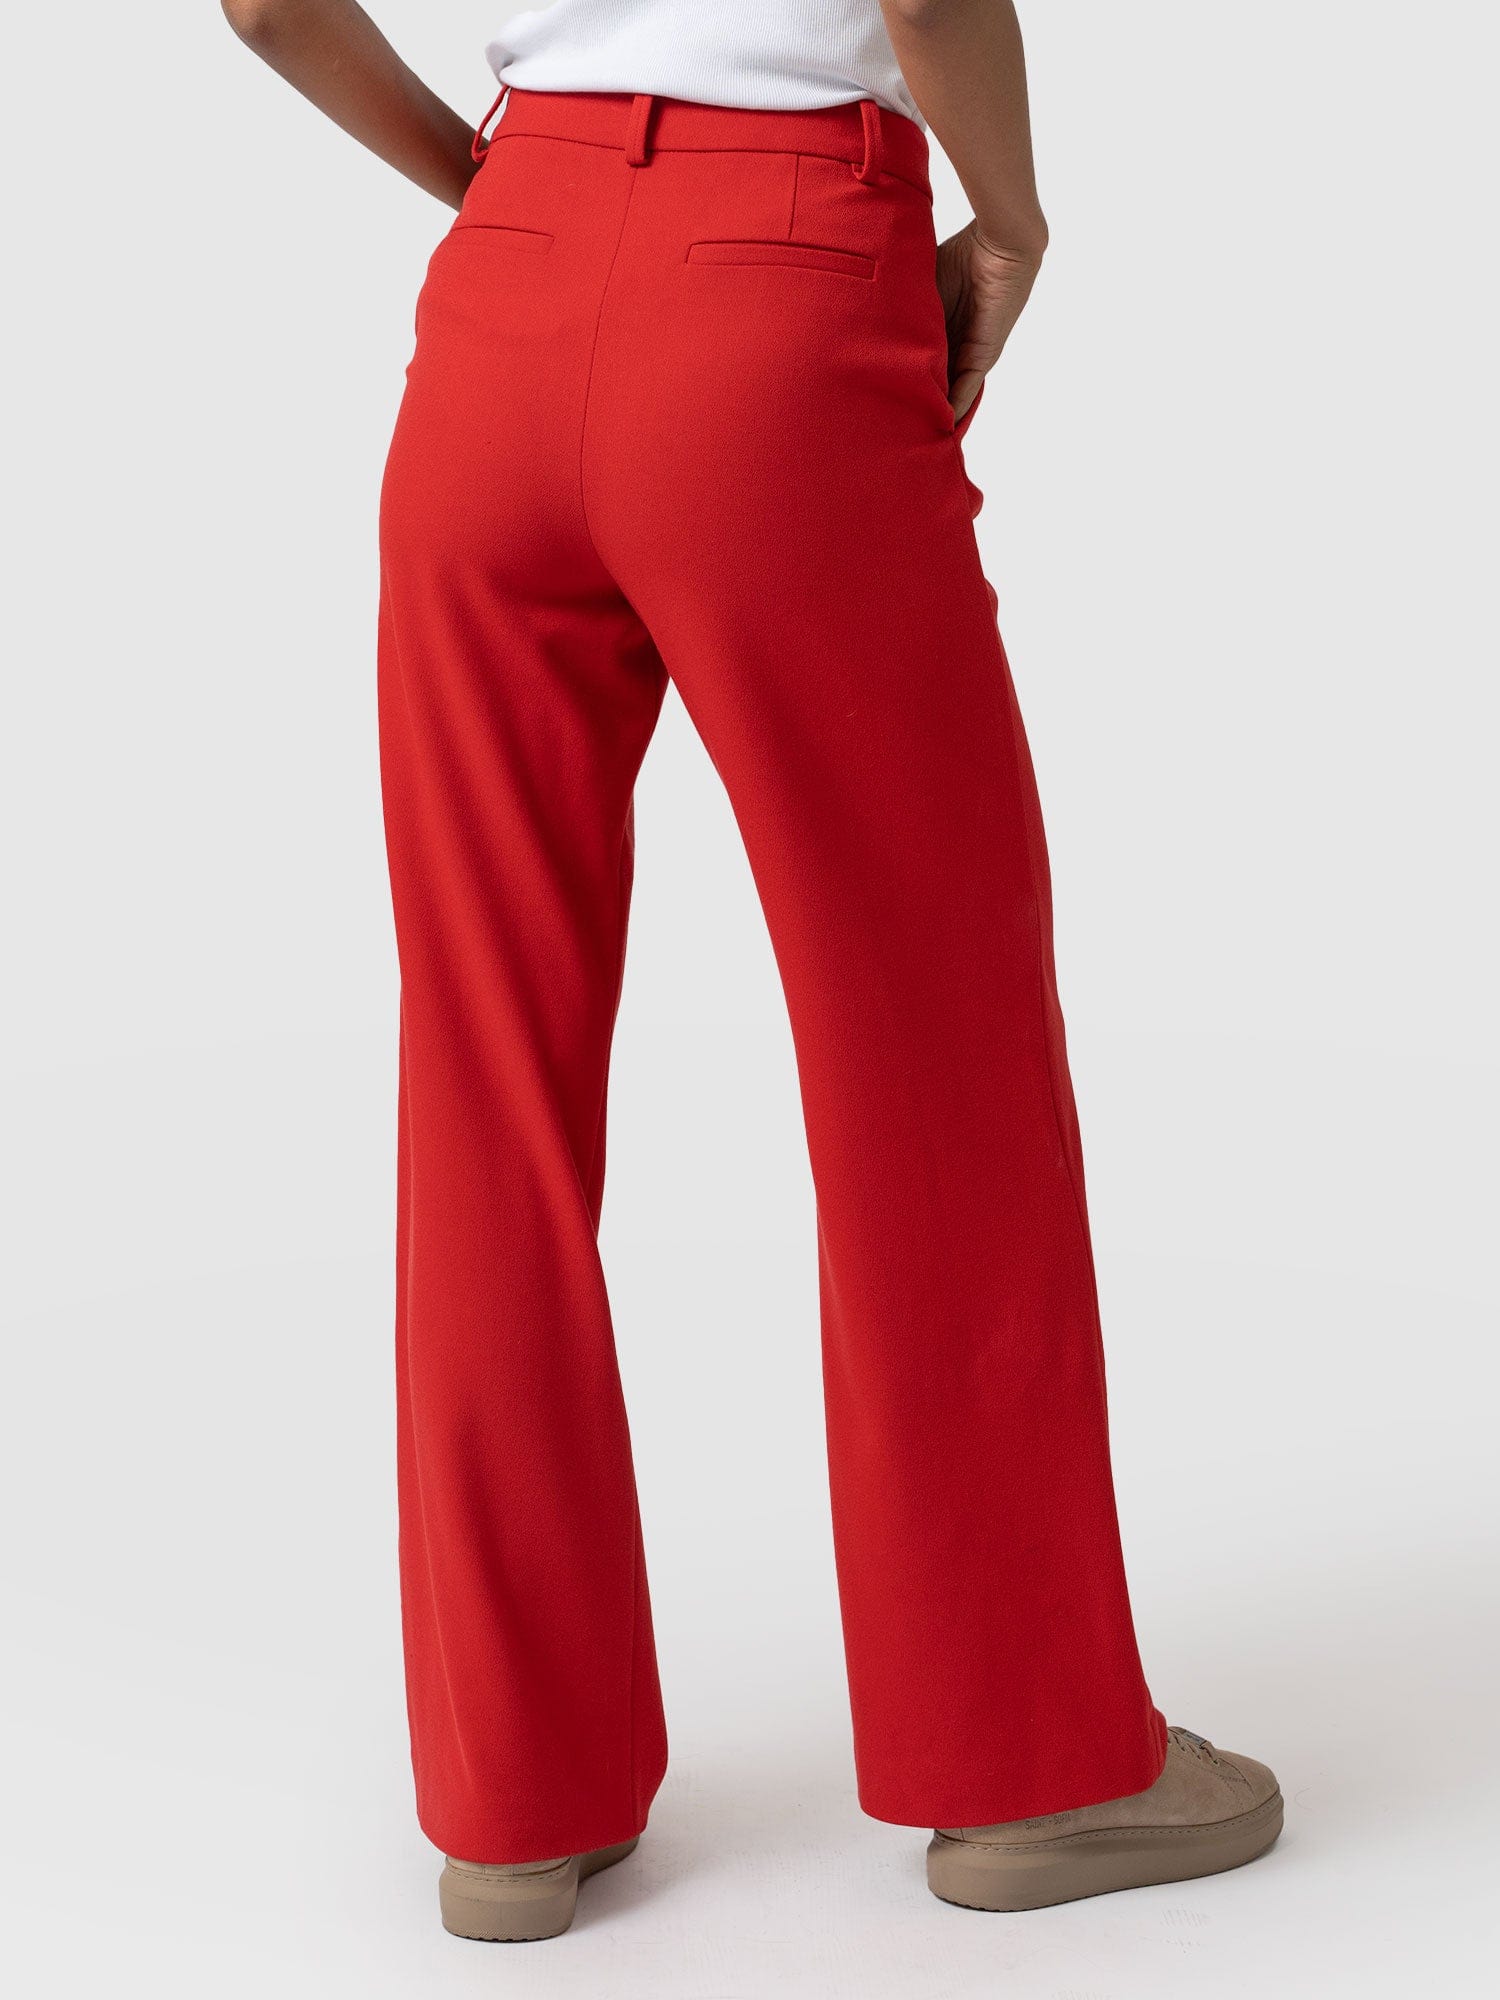 GANT Red Tailored Urban Comfort Tapered Chino Pants Trousers Size EU 52  UK/US 42 | eBay